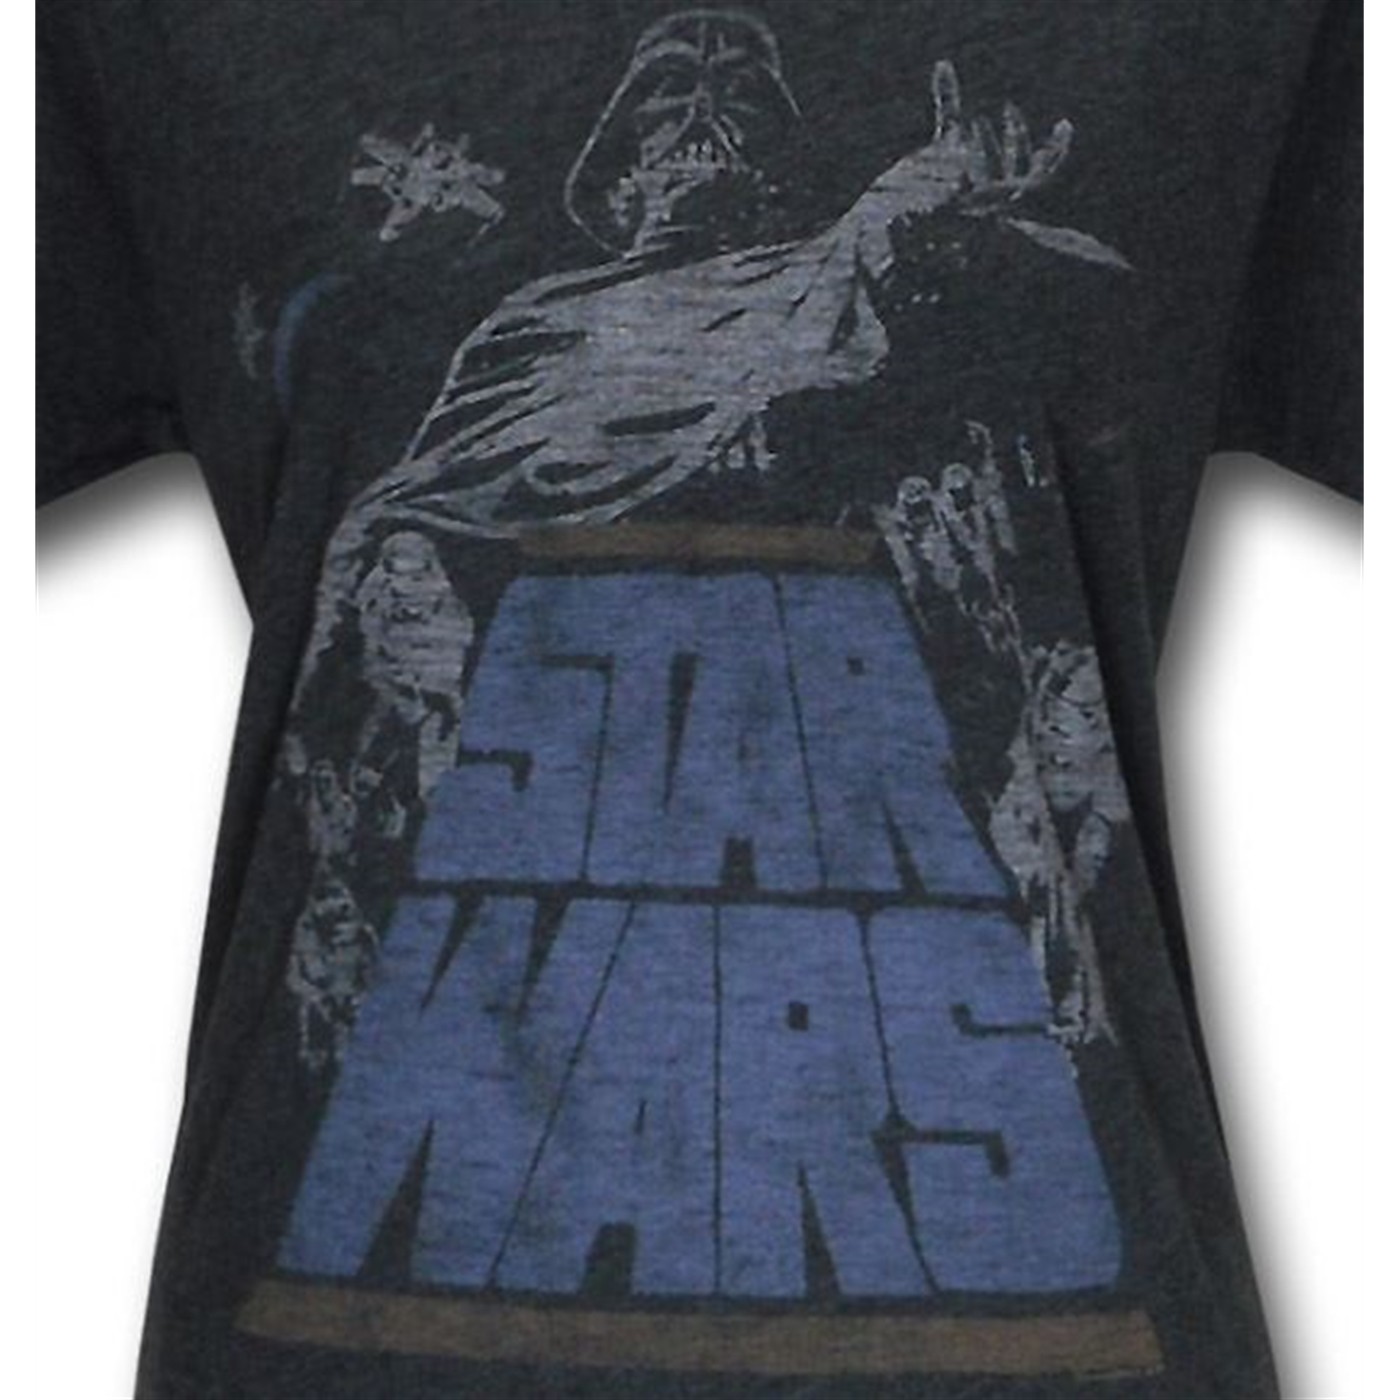 Star Wars Womens Empire Junk Food Slouch Shirt